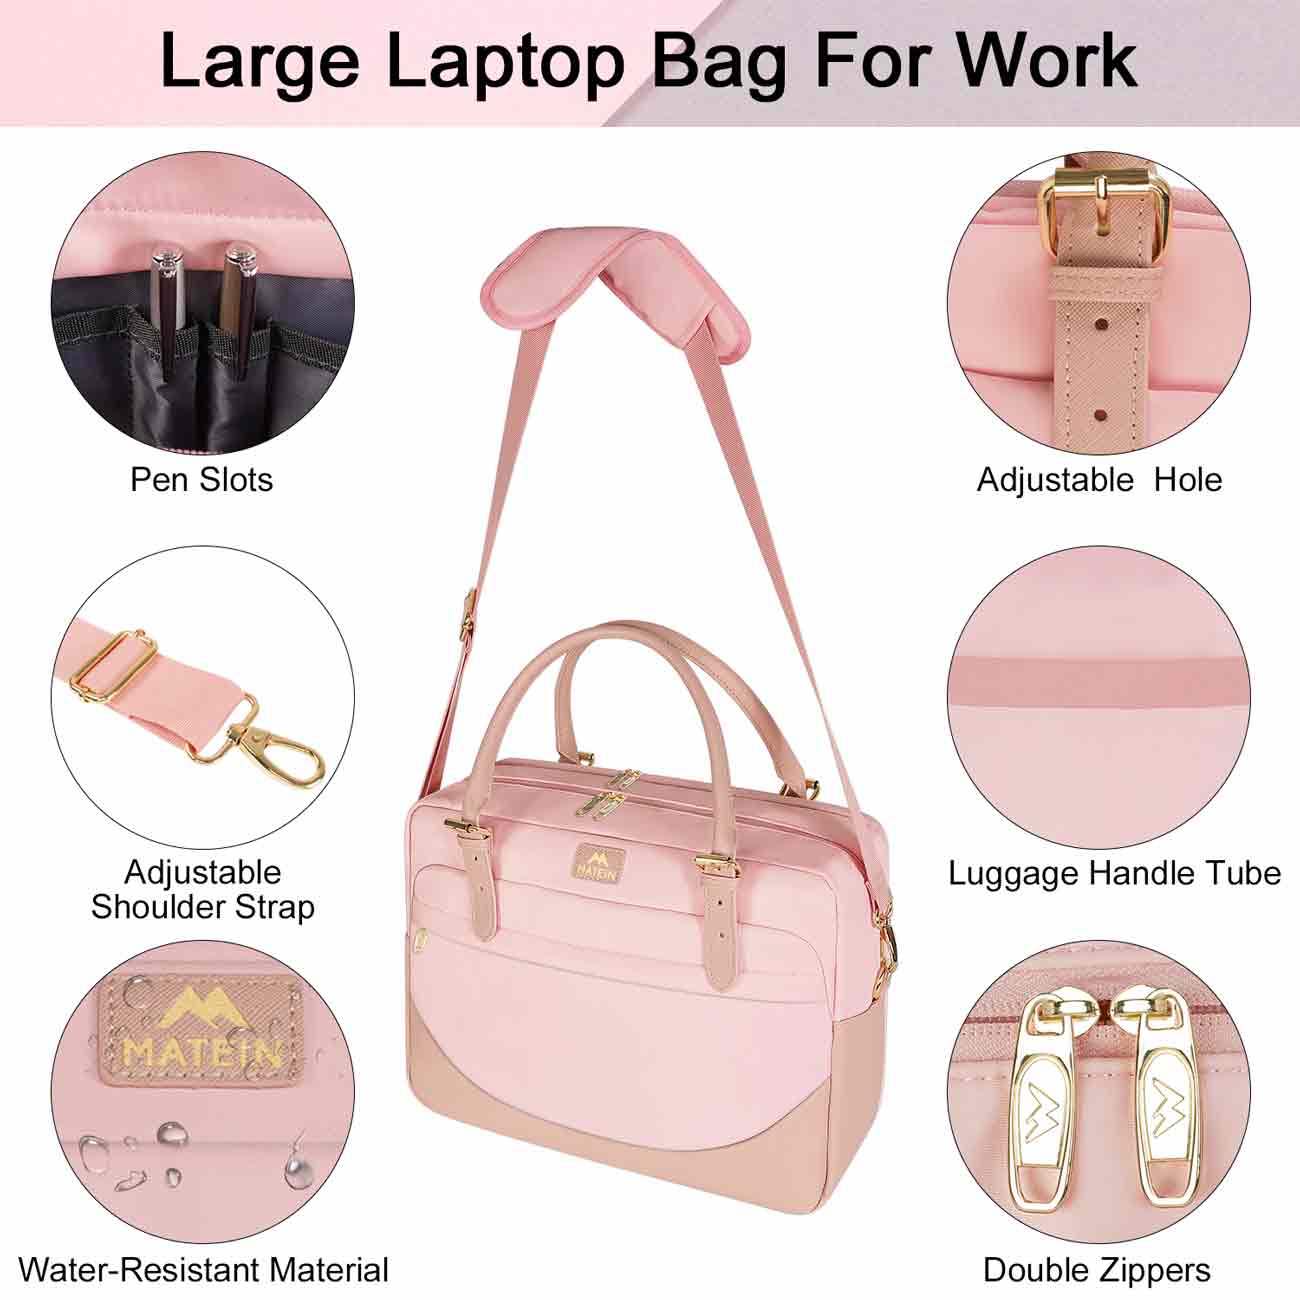 Laptop Bag Designer By Kate Spade Size: Large